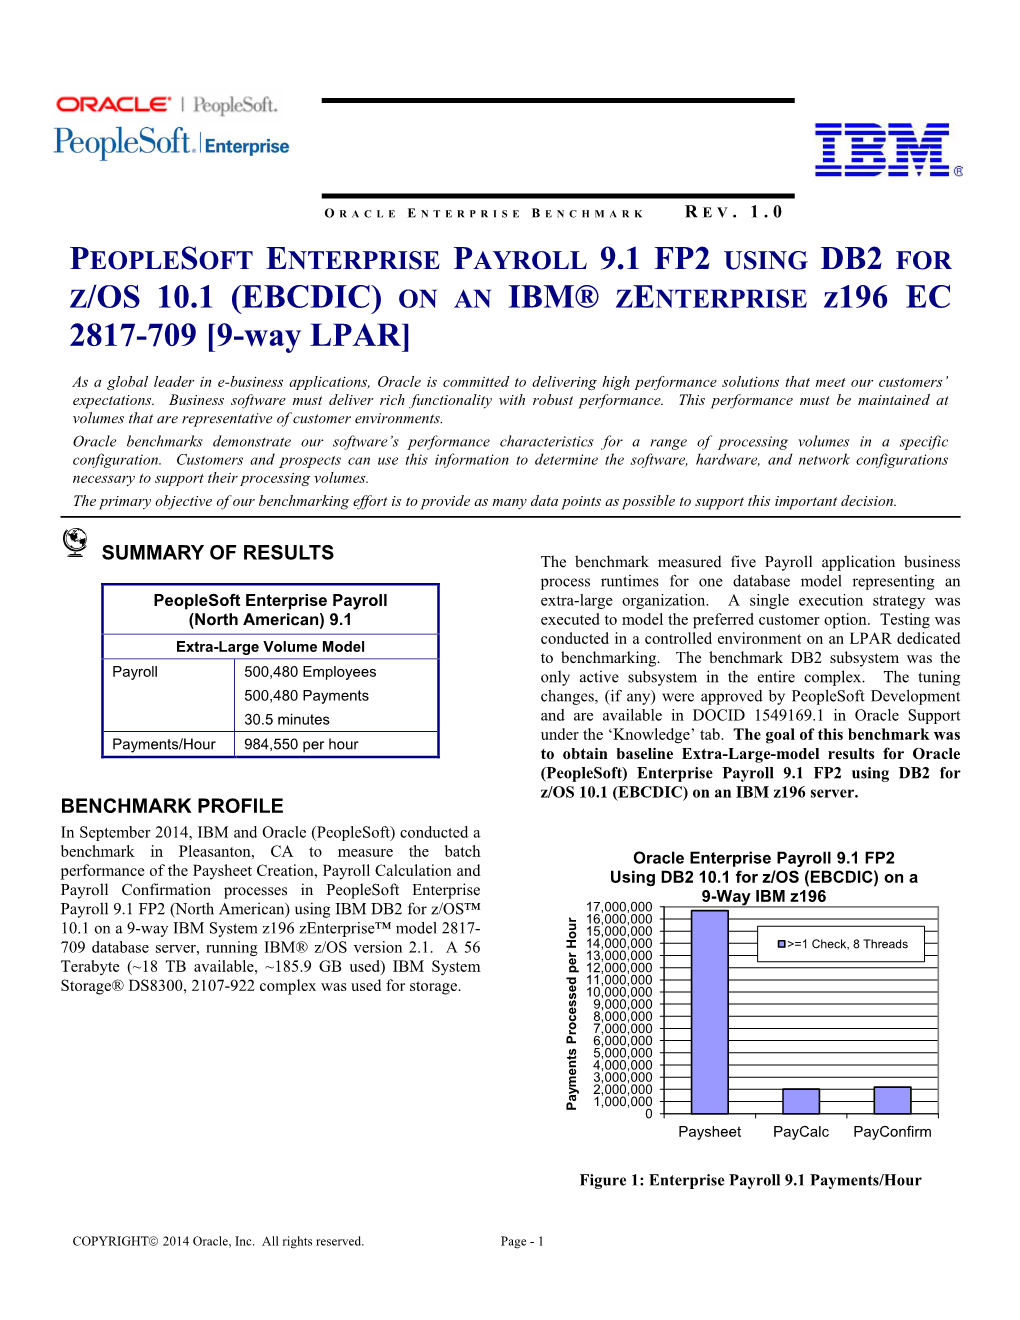 PEOPLESOFT ENTERPRISE PAYROLL 9.1 FP2 USING DB2 for Z/OS 10.1 (EBCDIC) on an IBM® ZENTERPRISE Z196 EC 2817-709 [9-Way LPAR]